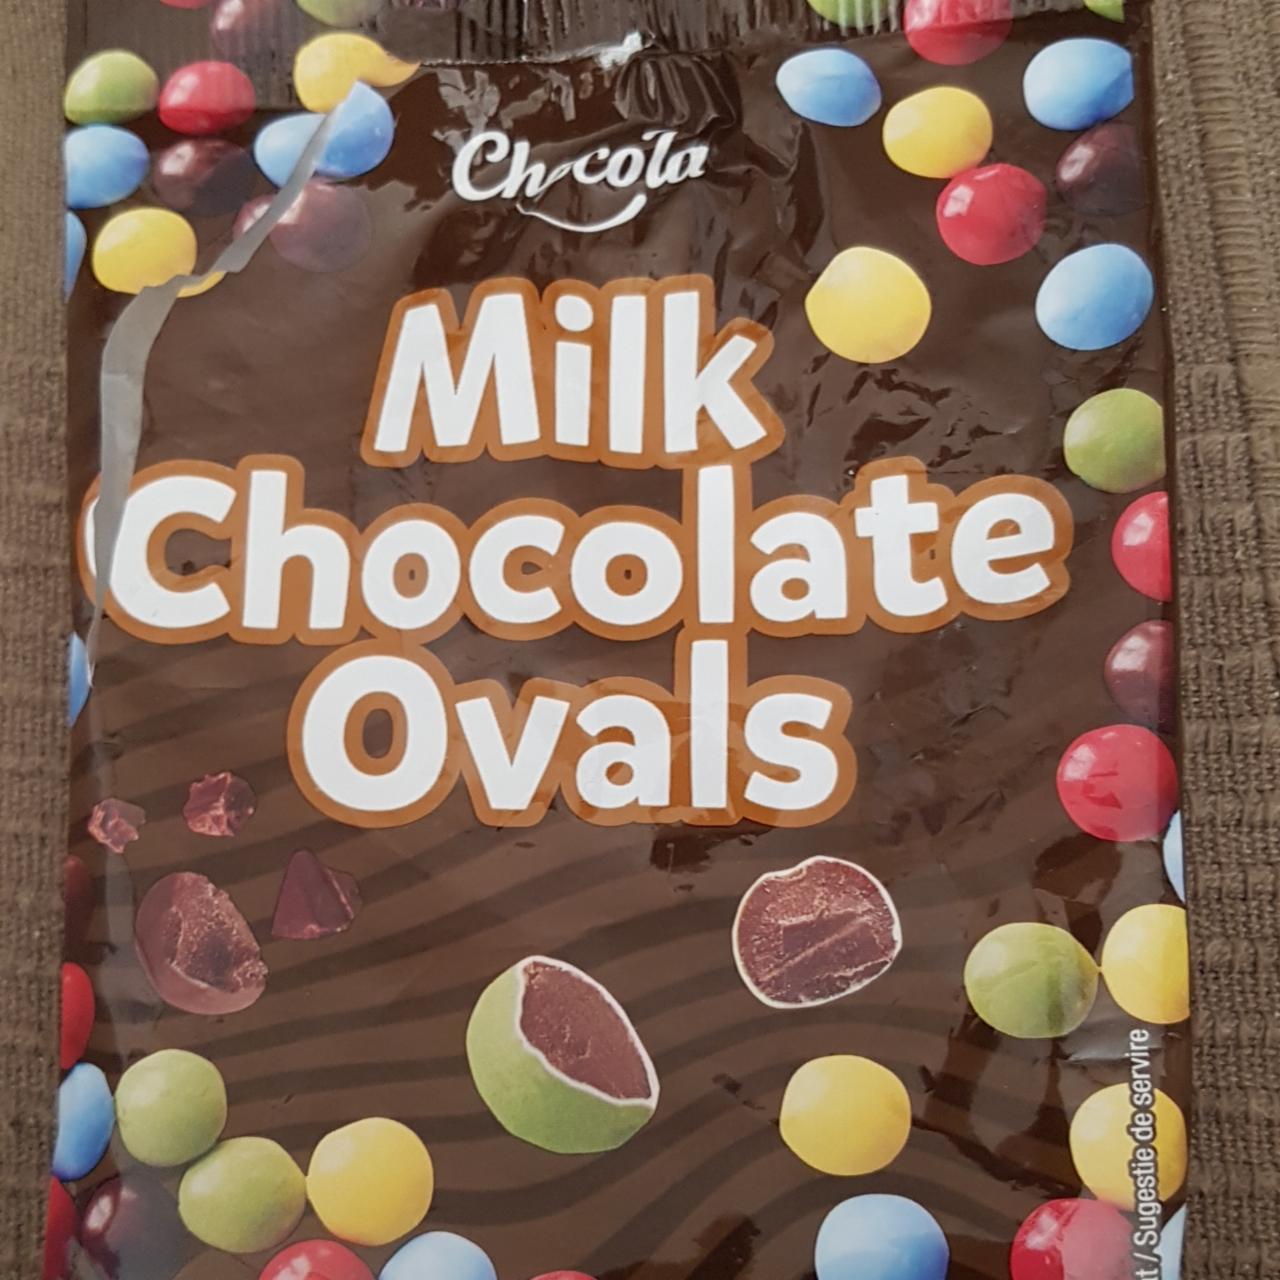 Képek - Milk chocolate ovals Chocóla